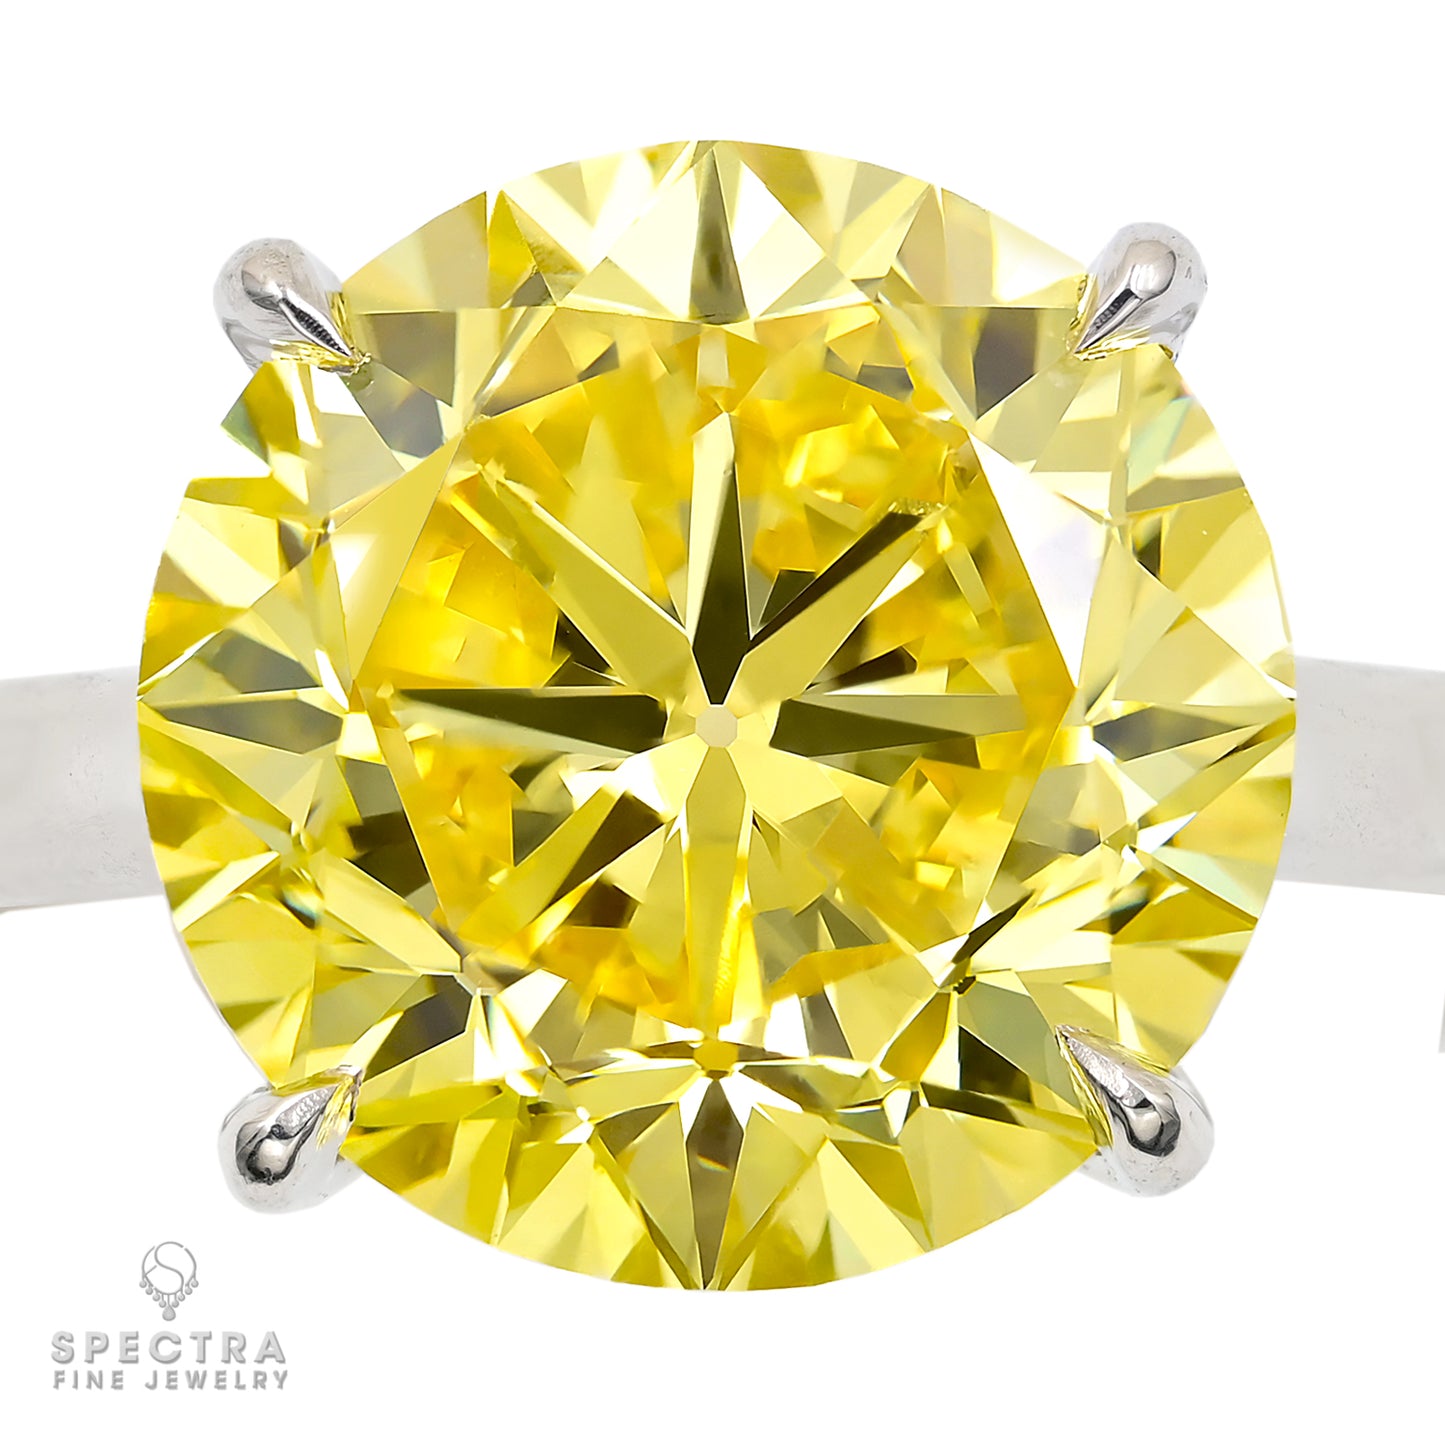 Spectra Fine Jewelry 2.37 ct. Fancy Vivid Yellow Diamond Solitaire Ring